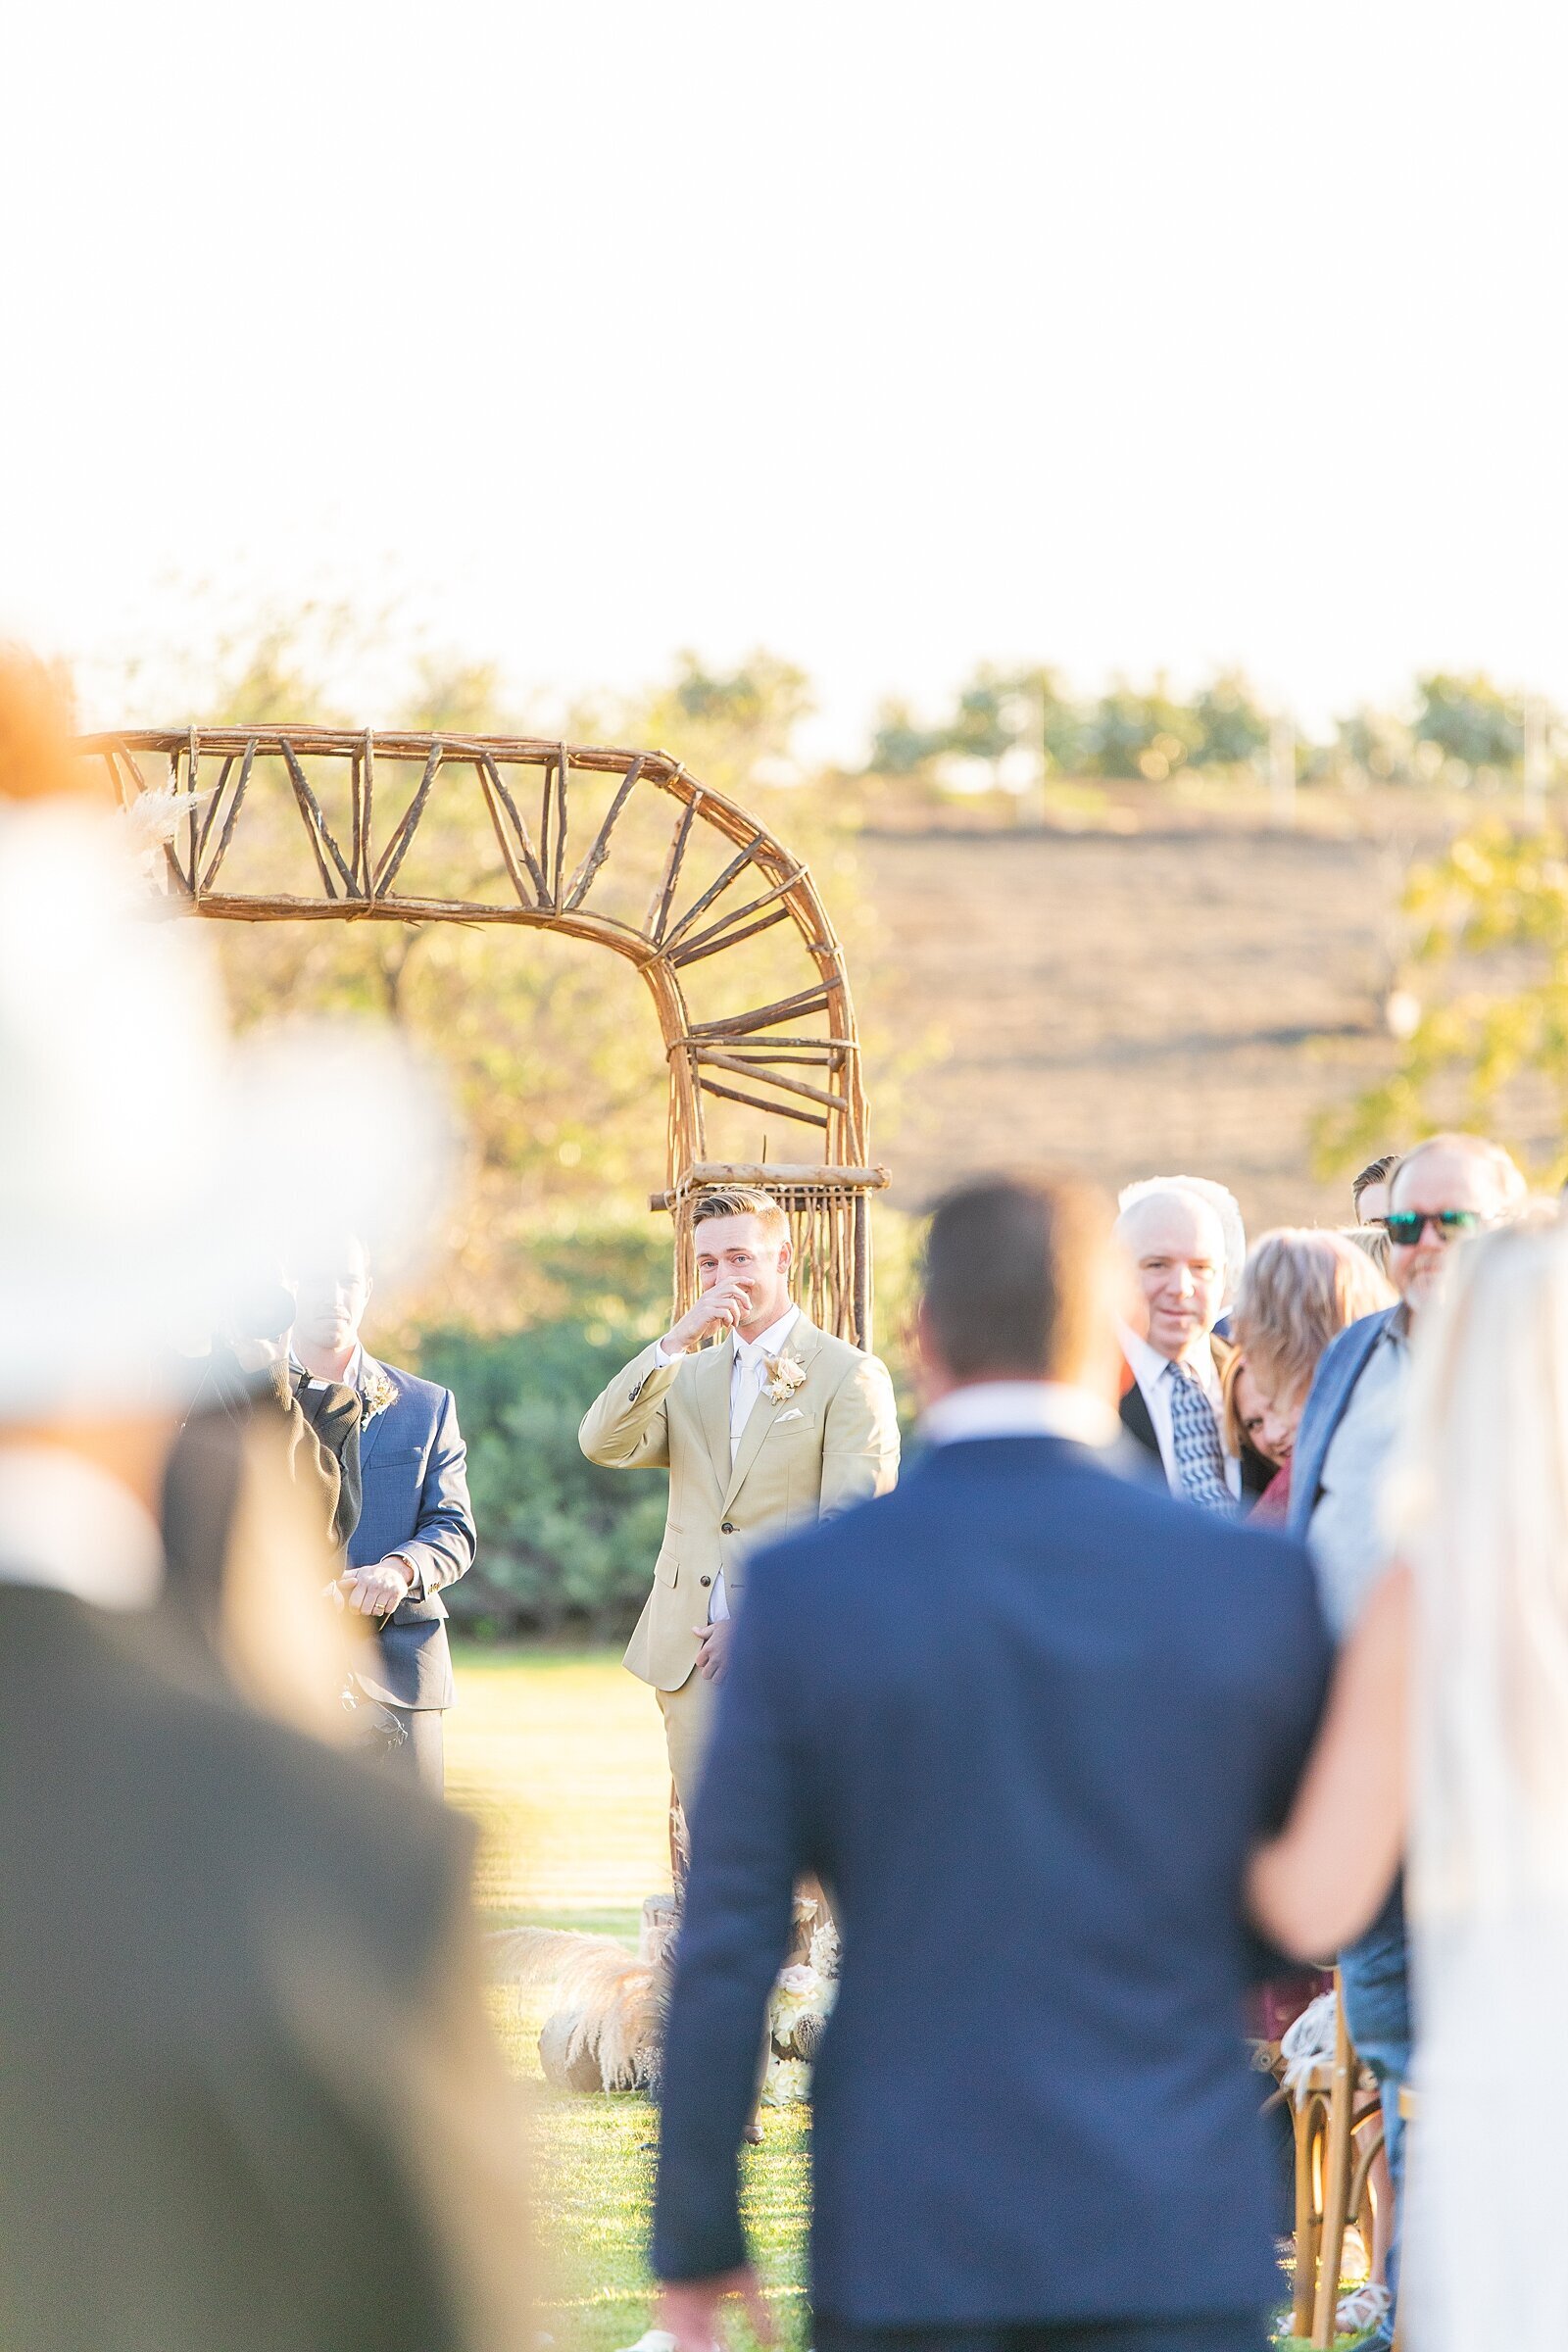 Groom crying as bride walks down the aisle at Ethreal Gardens wedding venue in Escondido.